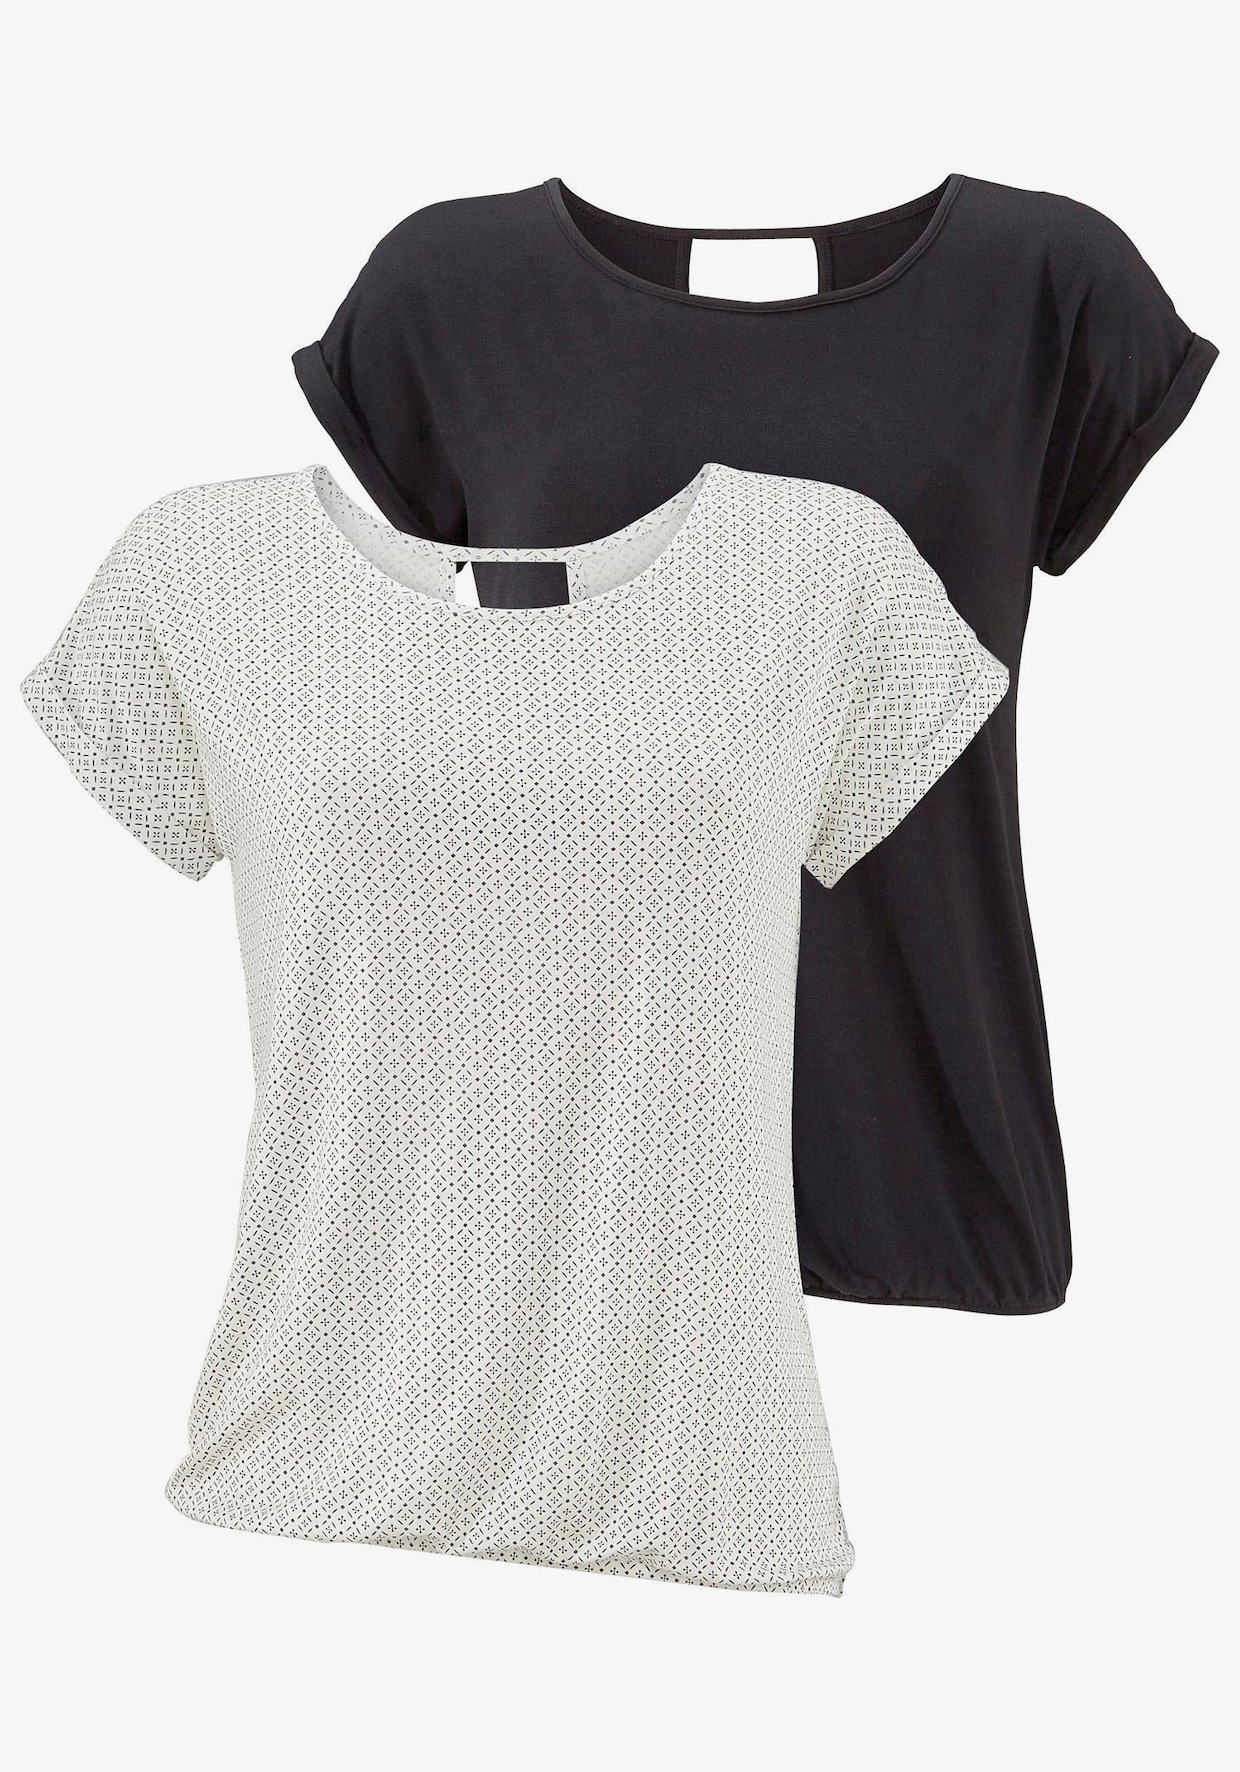 LASCANA T-Shirt - 1x offwhite-gemustert + 1x schwarz-uni